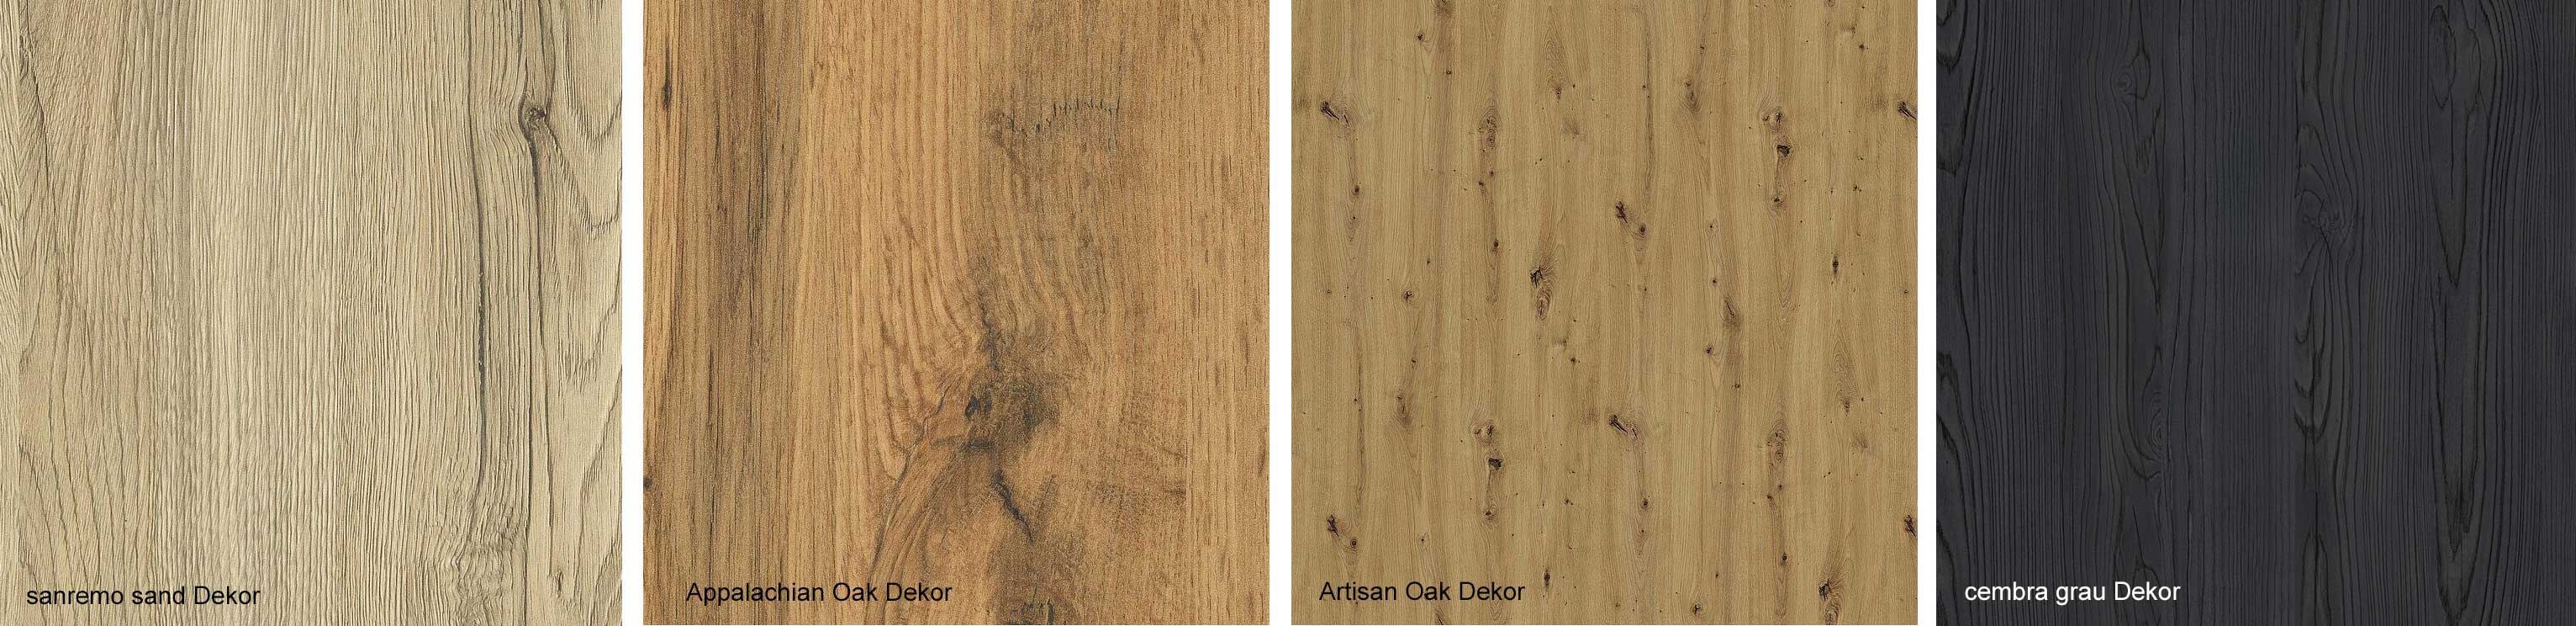 Schösswender st. Tropez Eckbank artisan oak Dekor Gavin braun